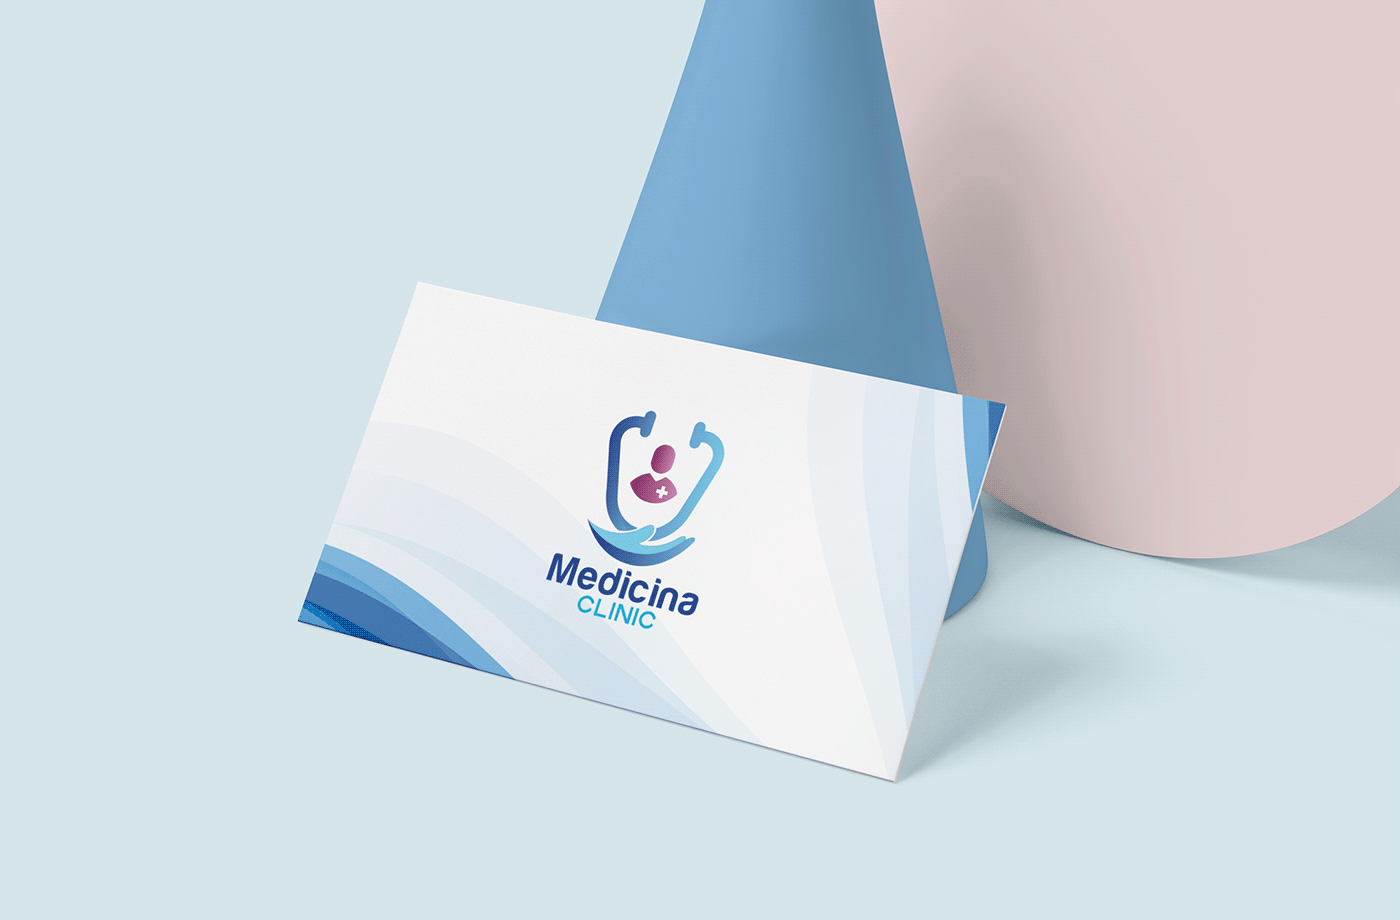 Clinics doctors hospital marketing   Marklinica medical center physician social media